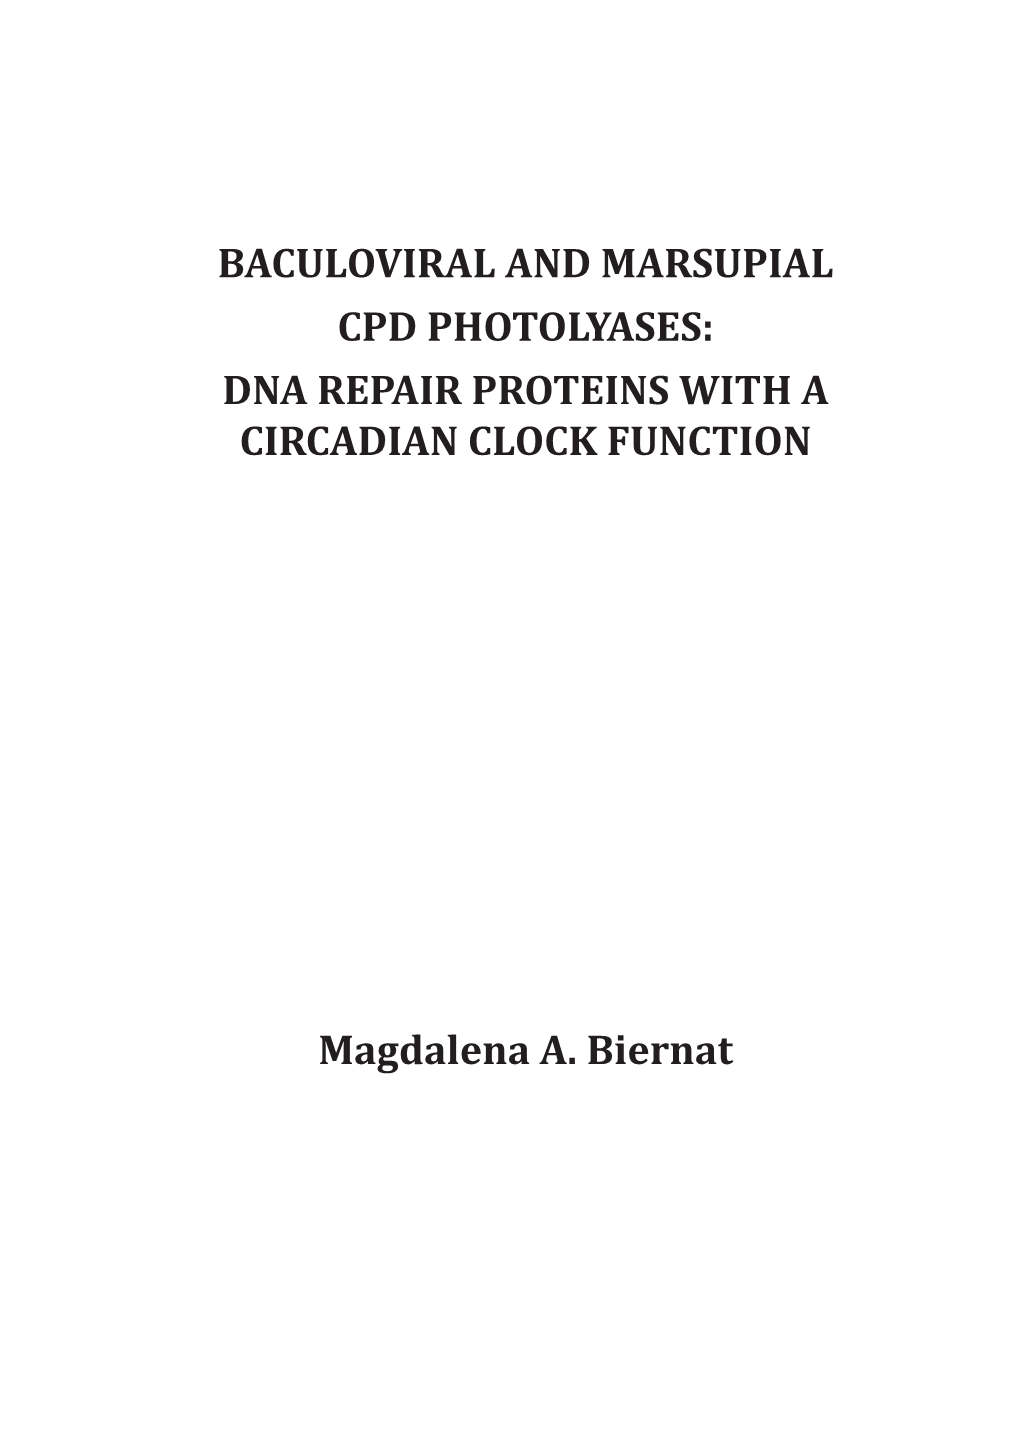 BACULOVIRAL and MARSUPIAL CPD PHOTOLYASES: DNA REPAIR PROTEINS with a CIRCADIAN CLOCK FUNCTION Magdalena A. Biernat